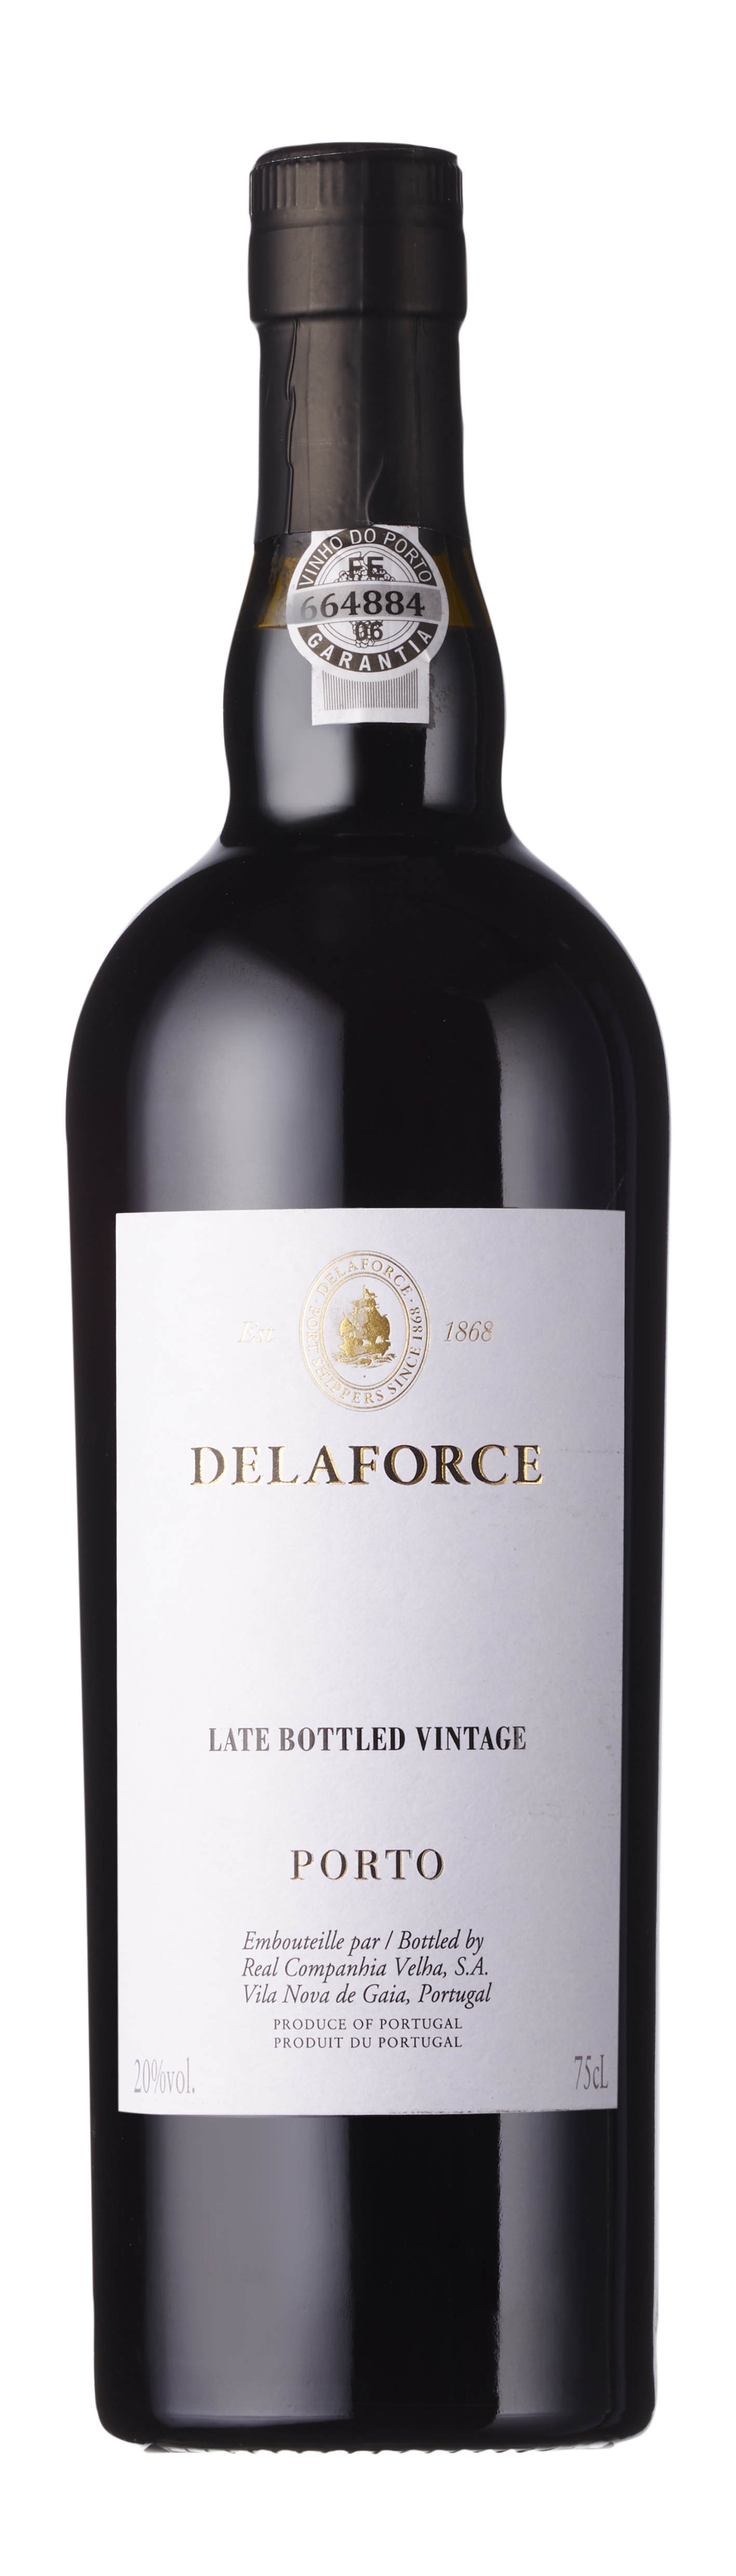 Bottle shot - Delaforce, LBV, DOC Douro, Portugal